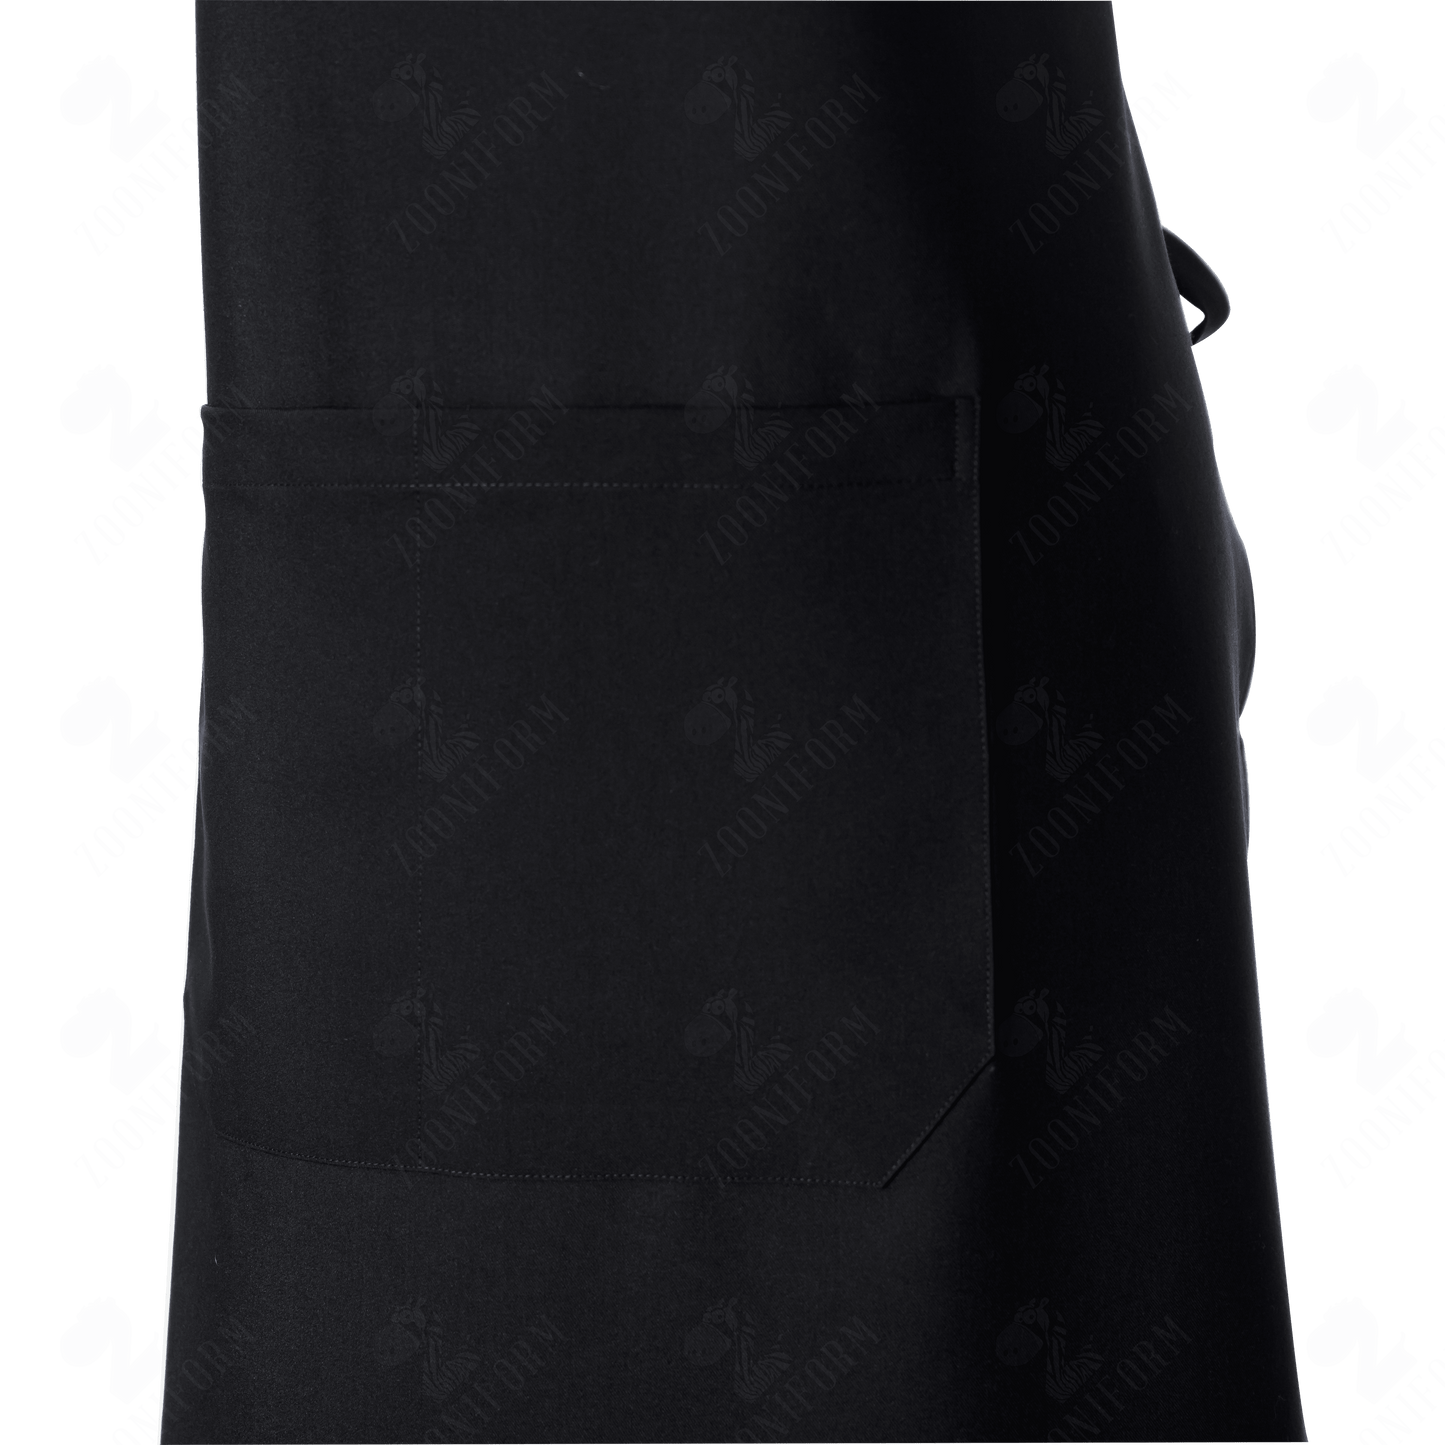 Cotton Black Bib Apron Two Pockets, Adjustable Neck Strap